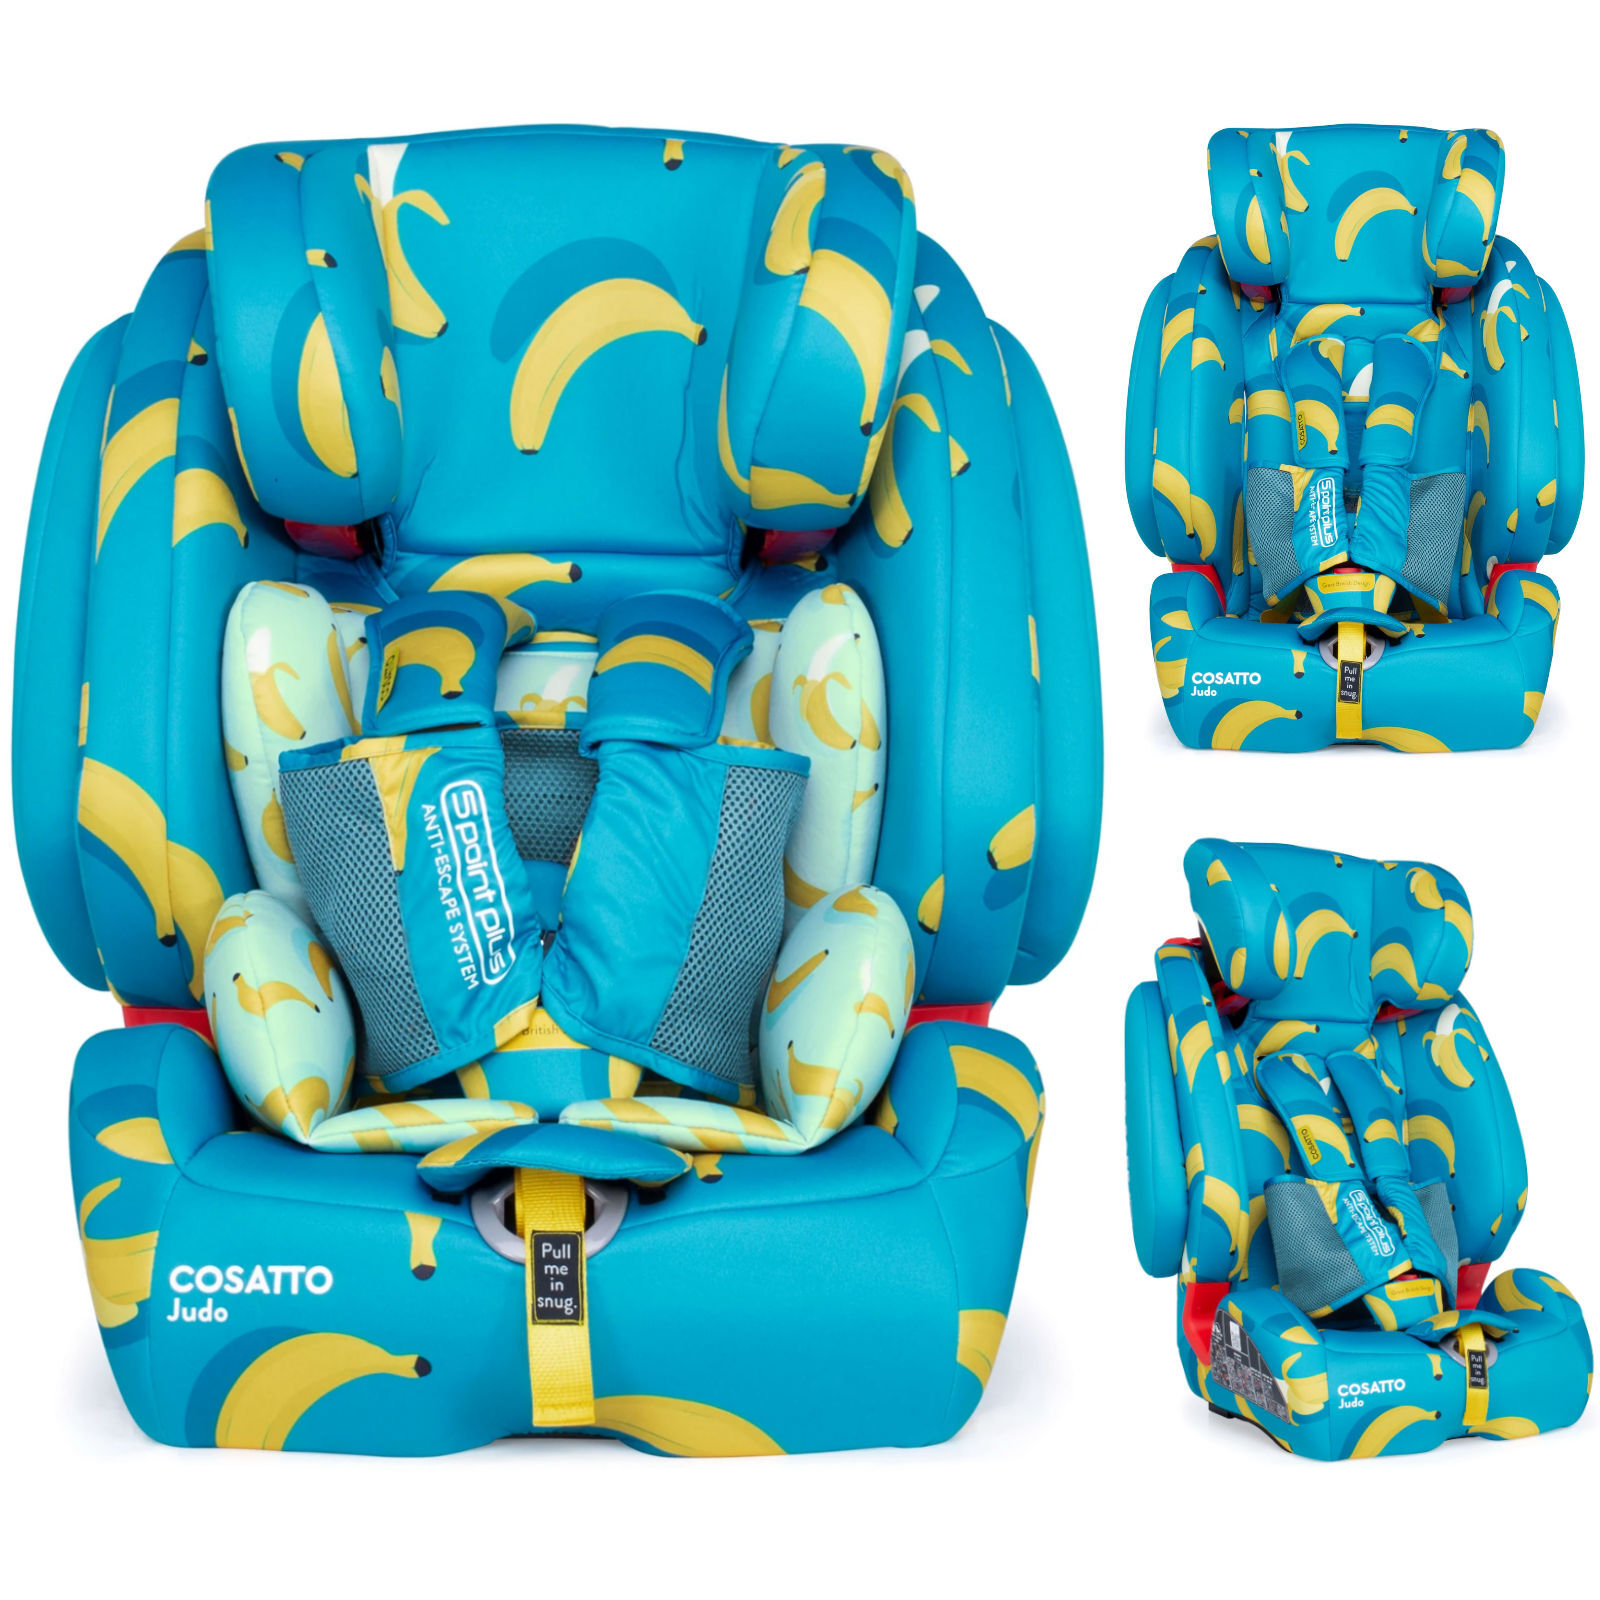 Cosatto Judo Group 123 Infant ISOFIX Car Seat - Go Bananas